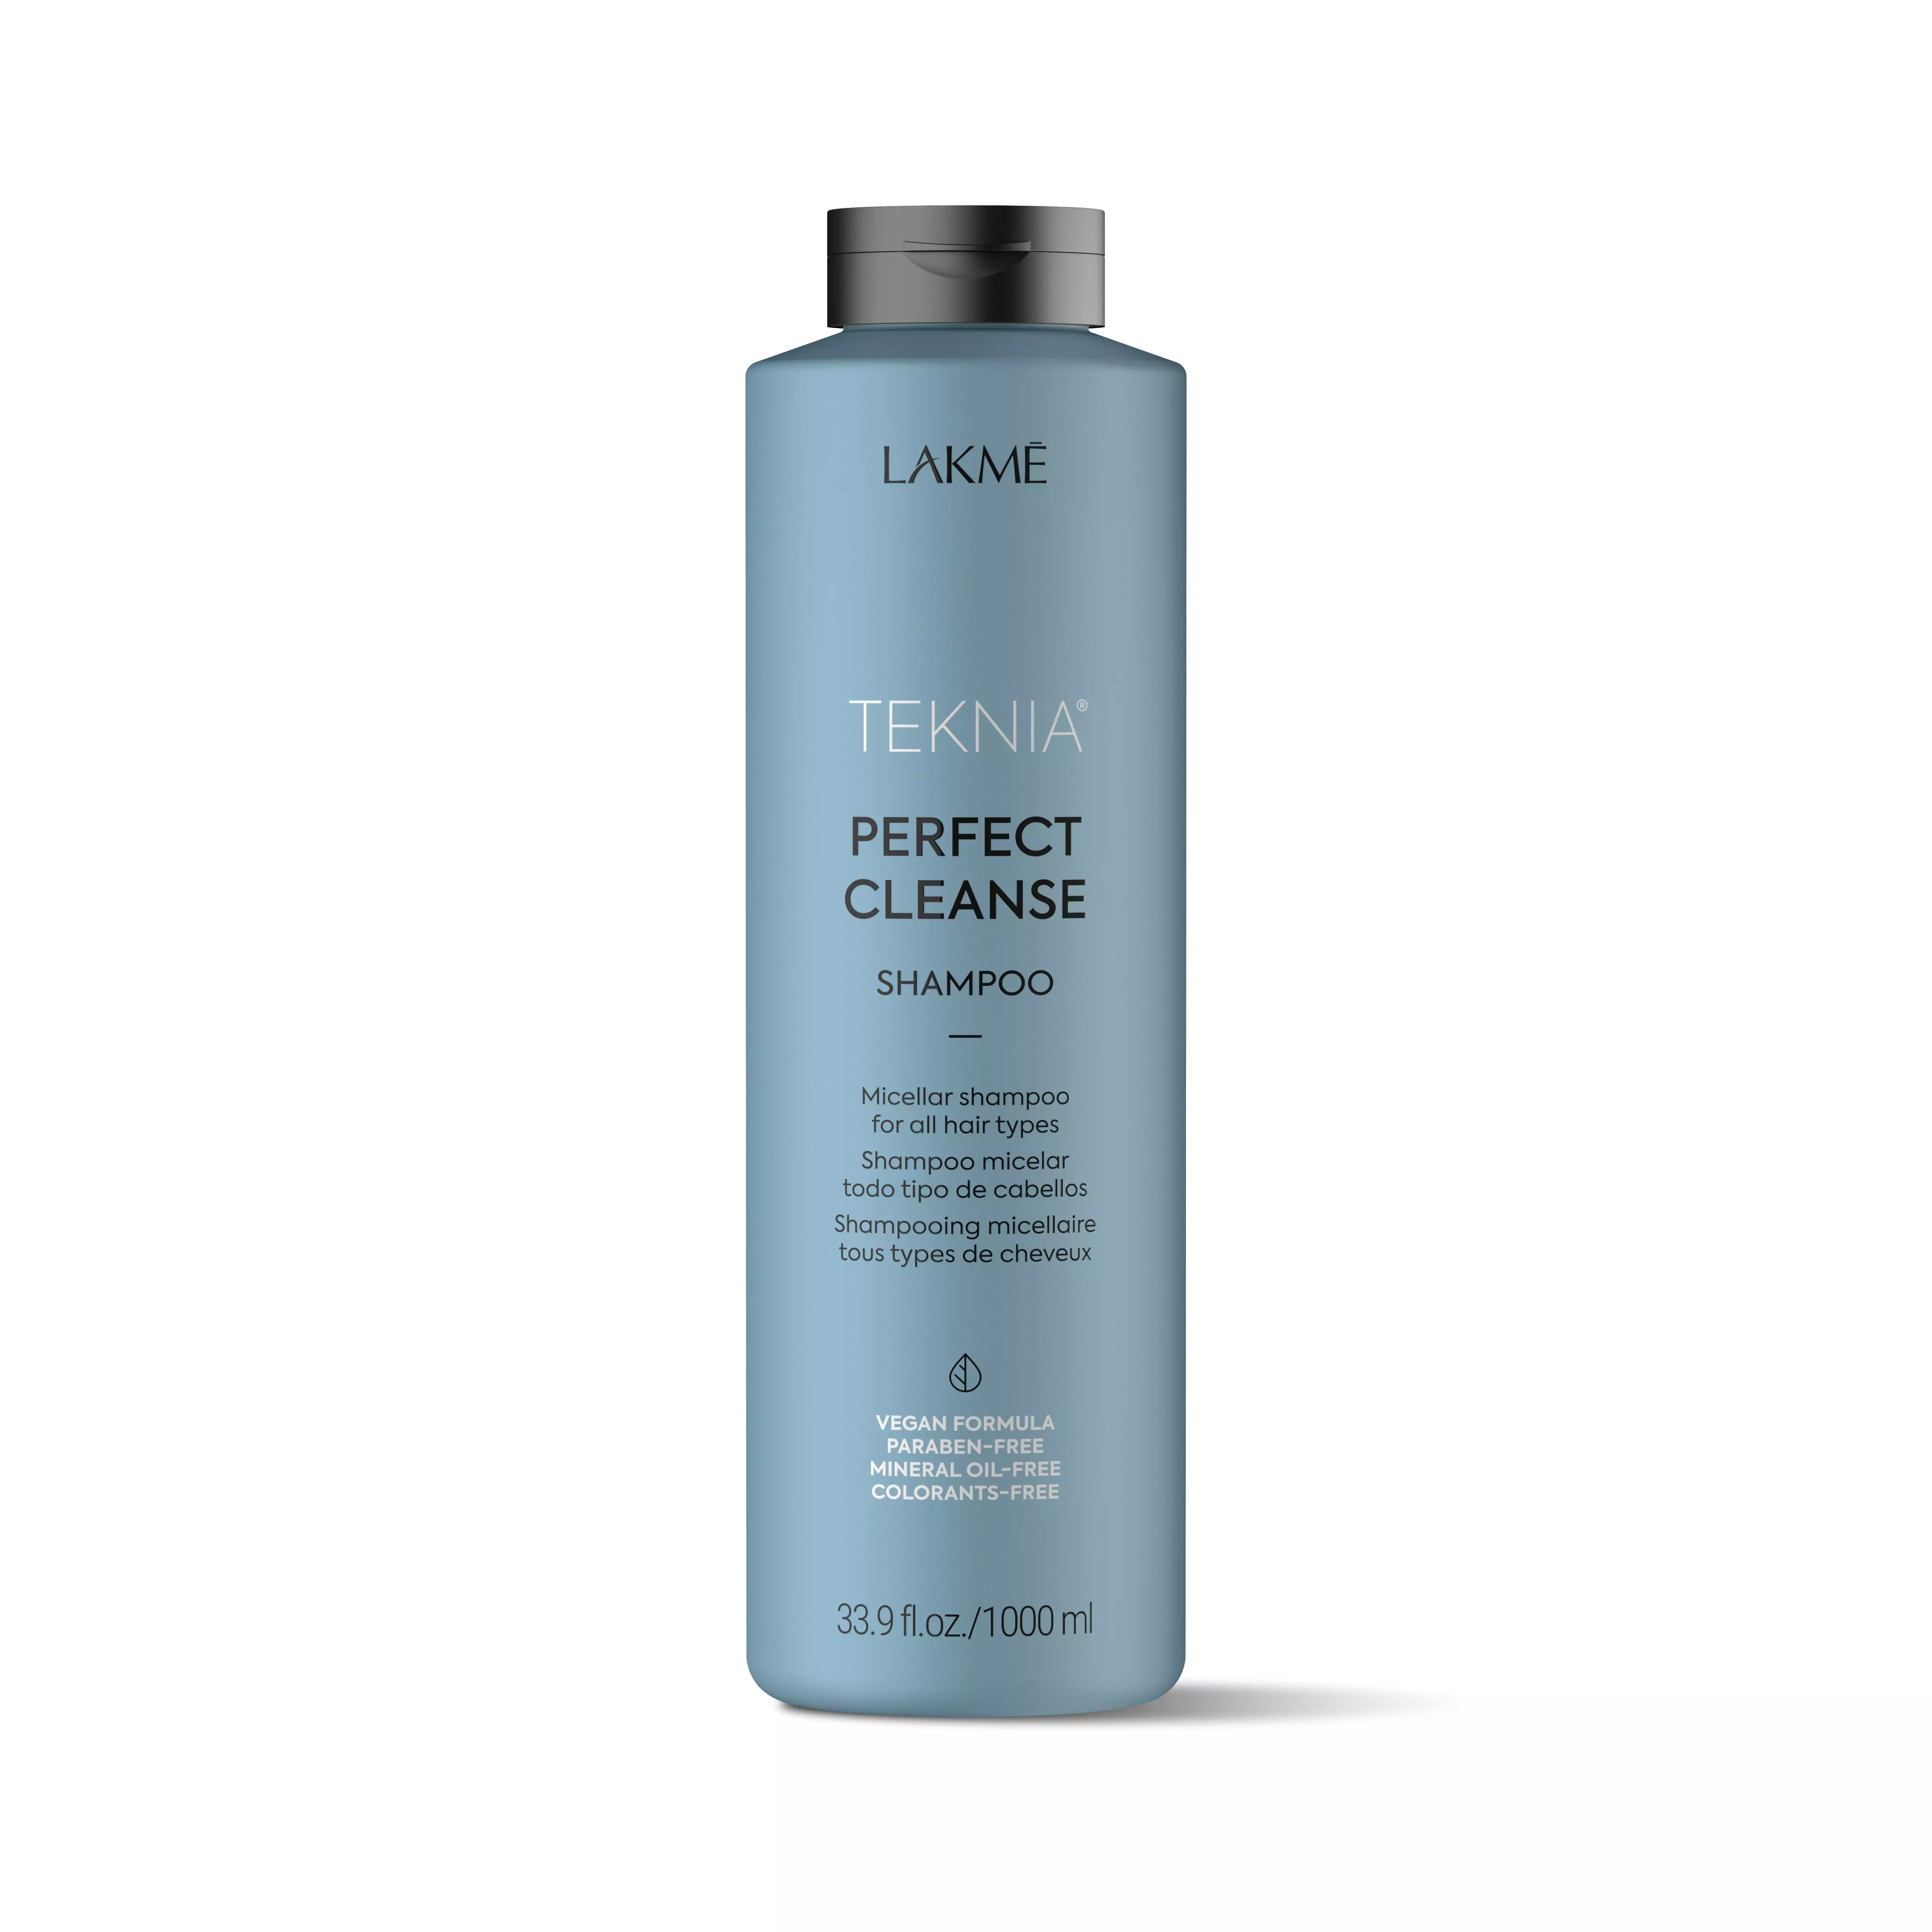 Lakme Teknia Perfect Cleanse Shampoo 1000